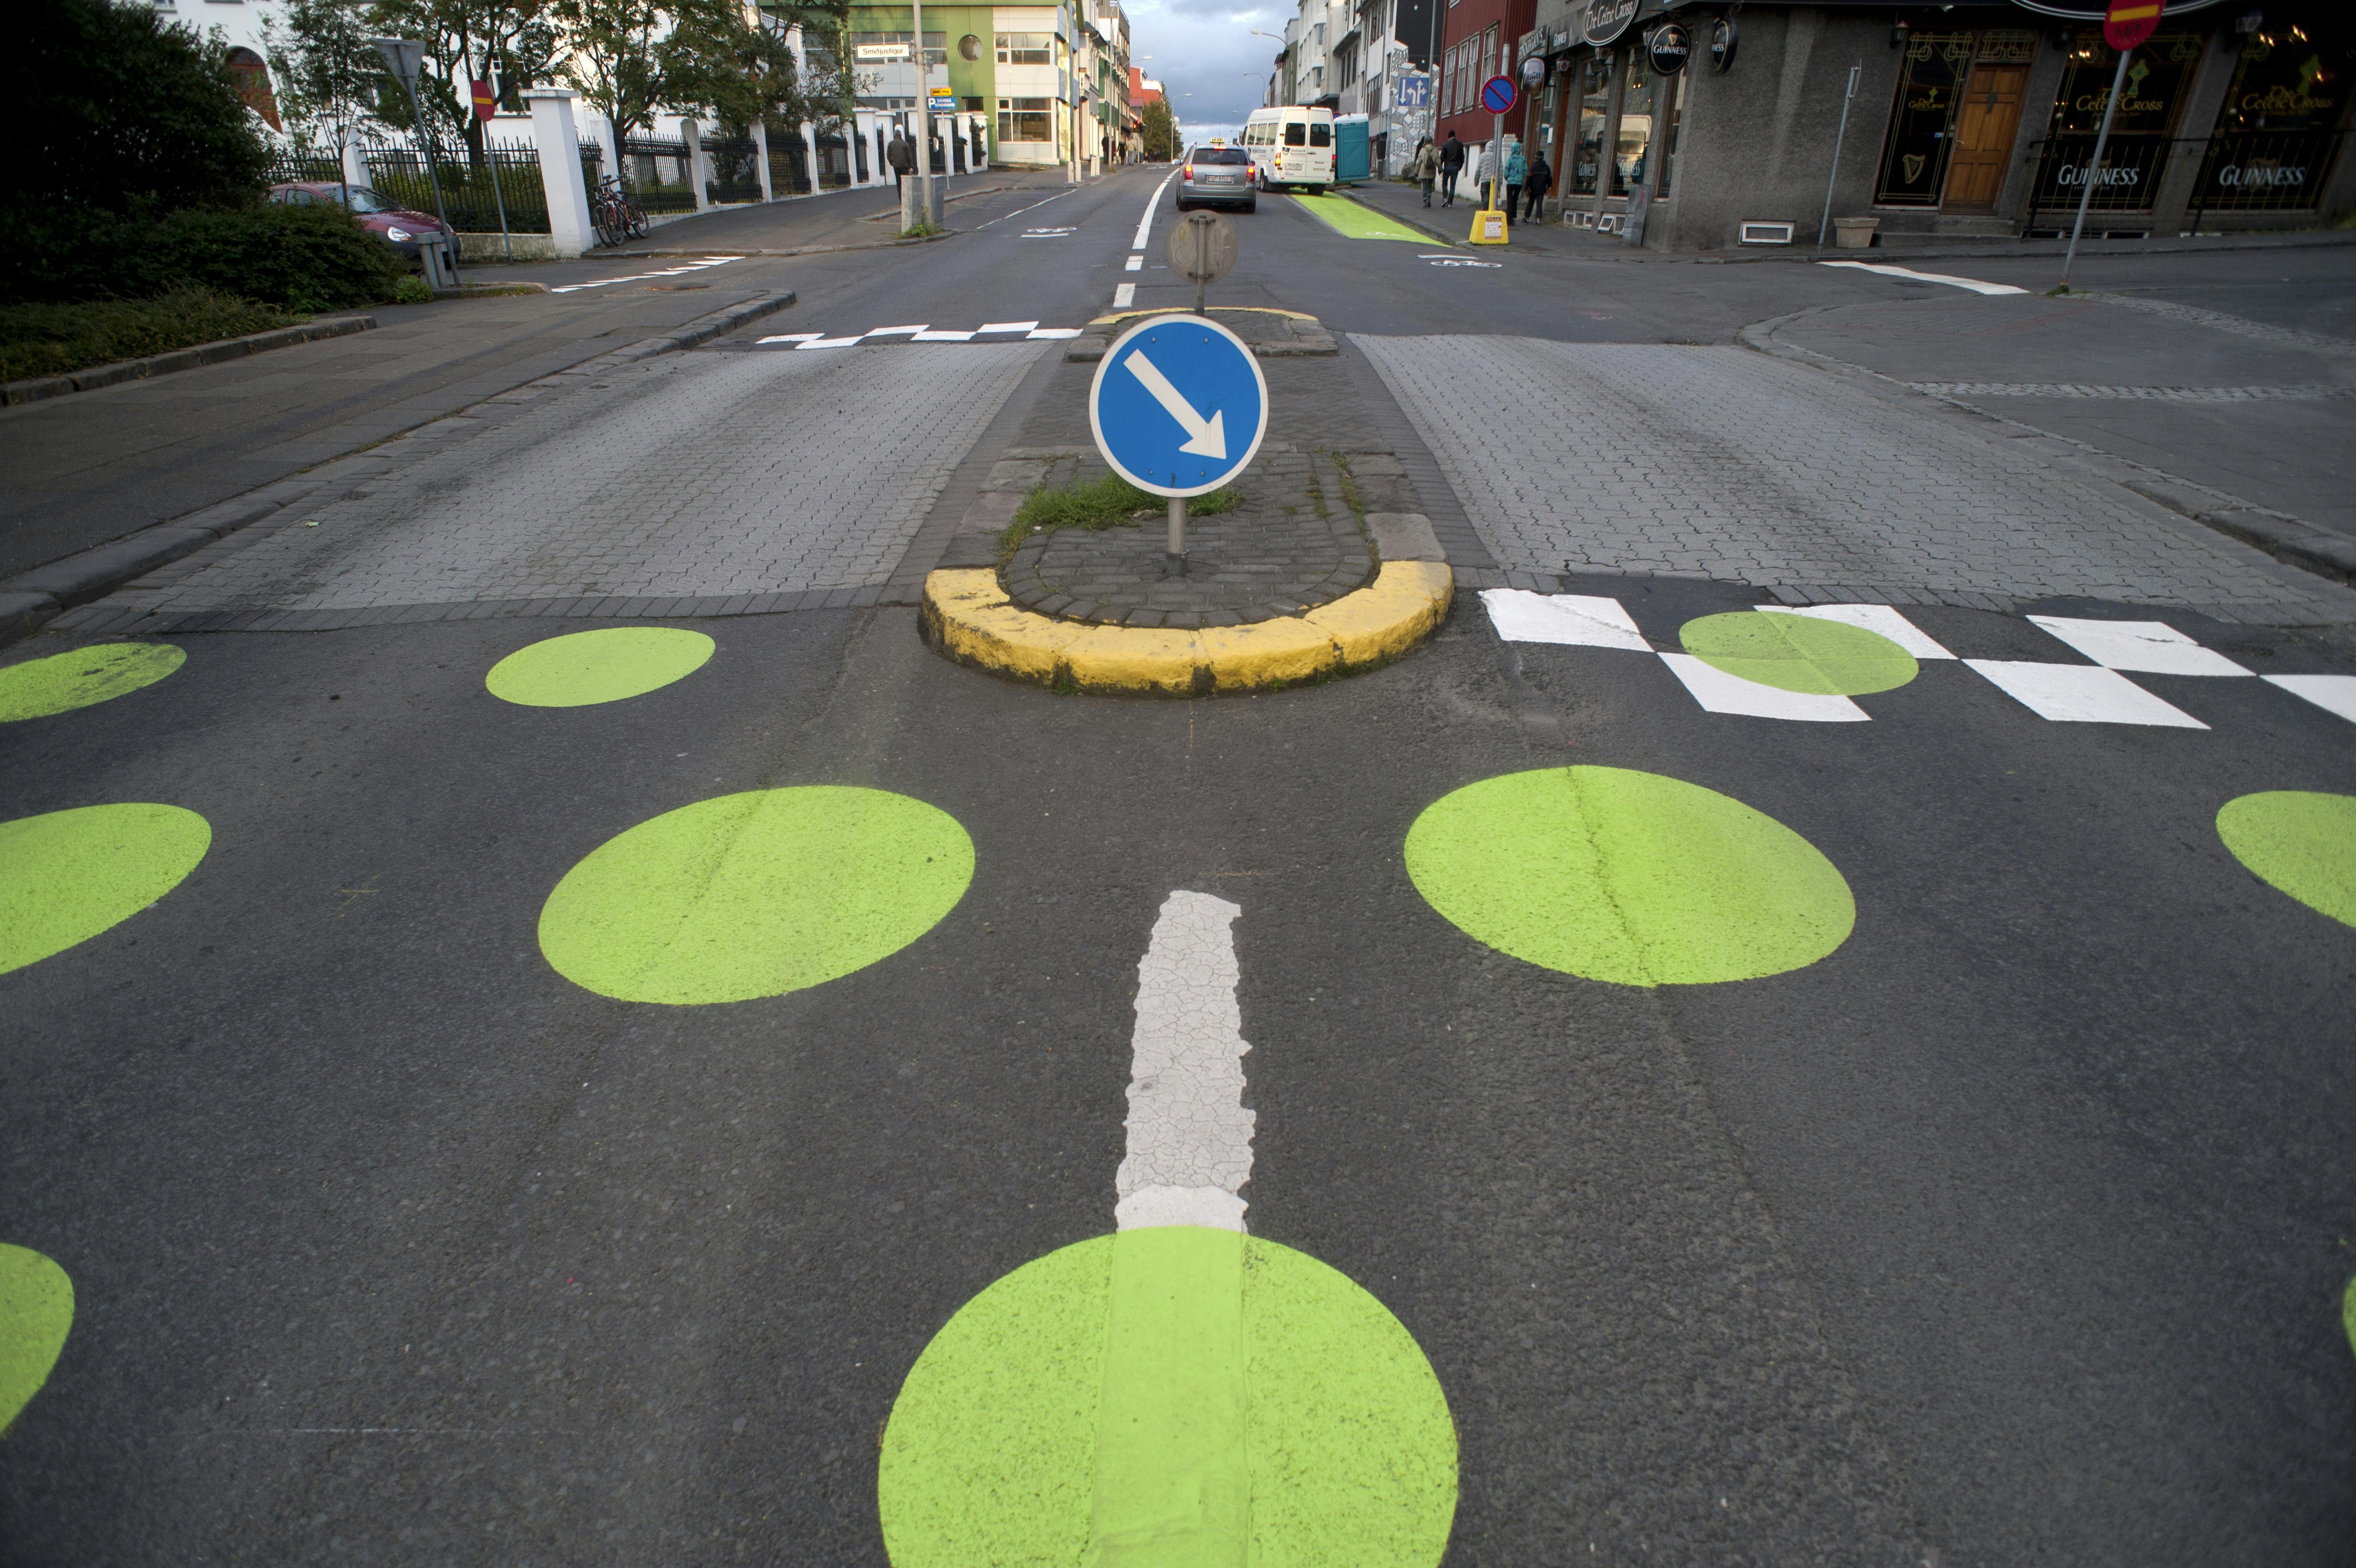 Decorative art treatment on road crossing example